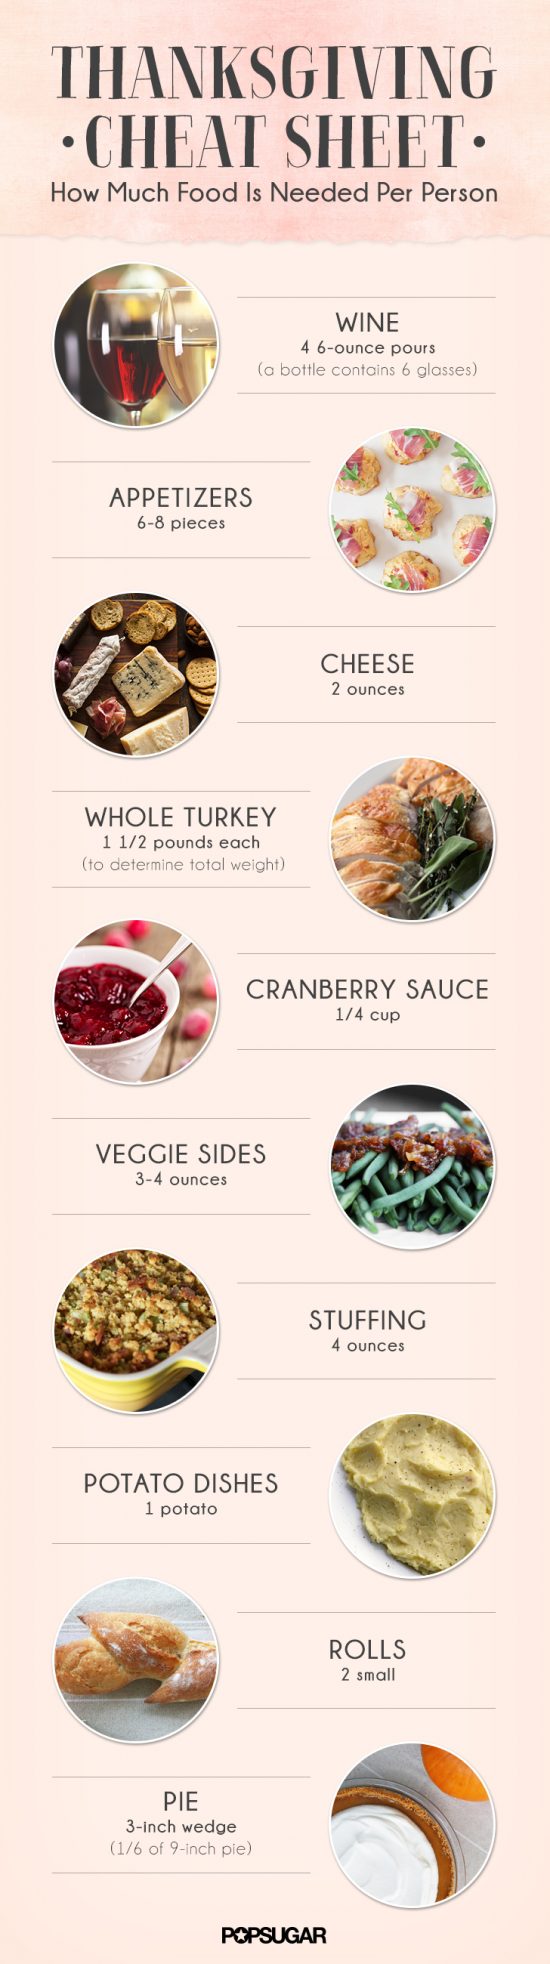 Food-Thankgiving-Cheat-Sheet